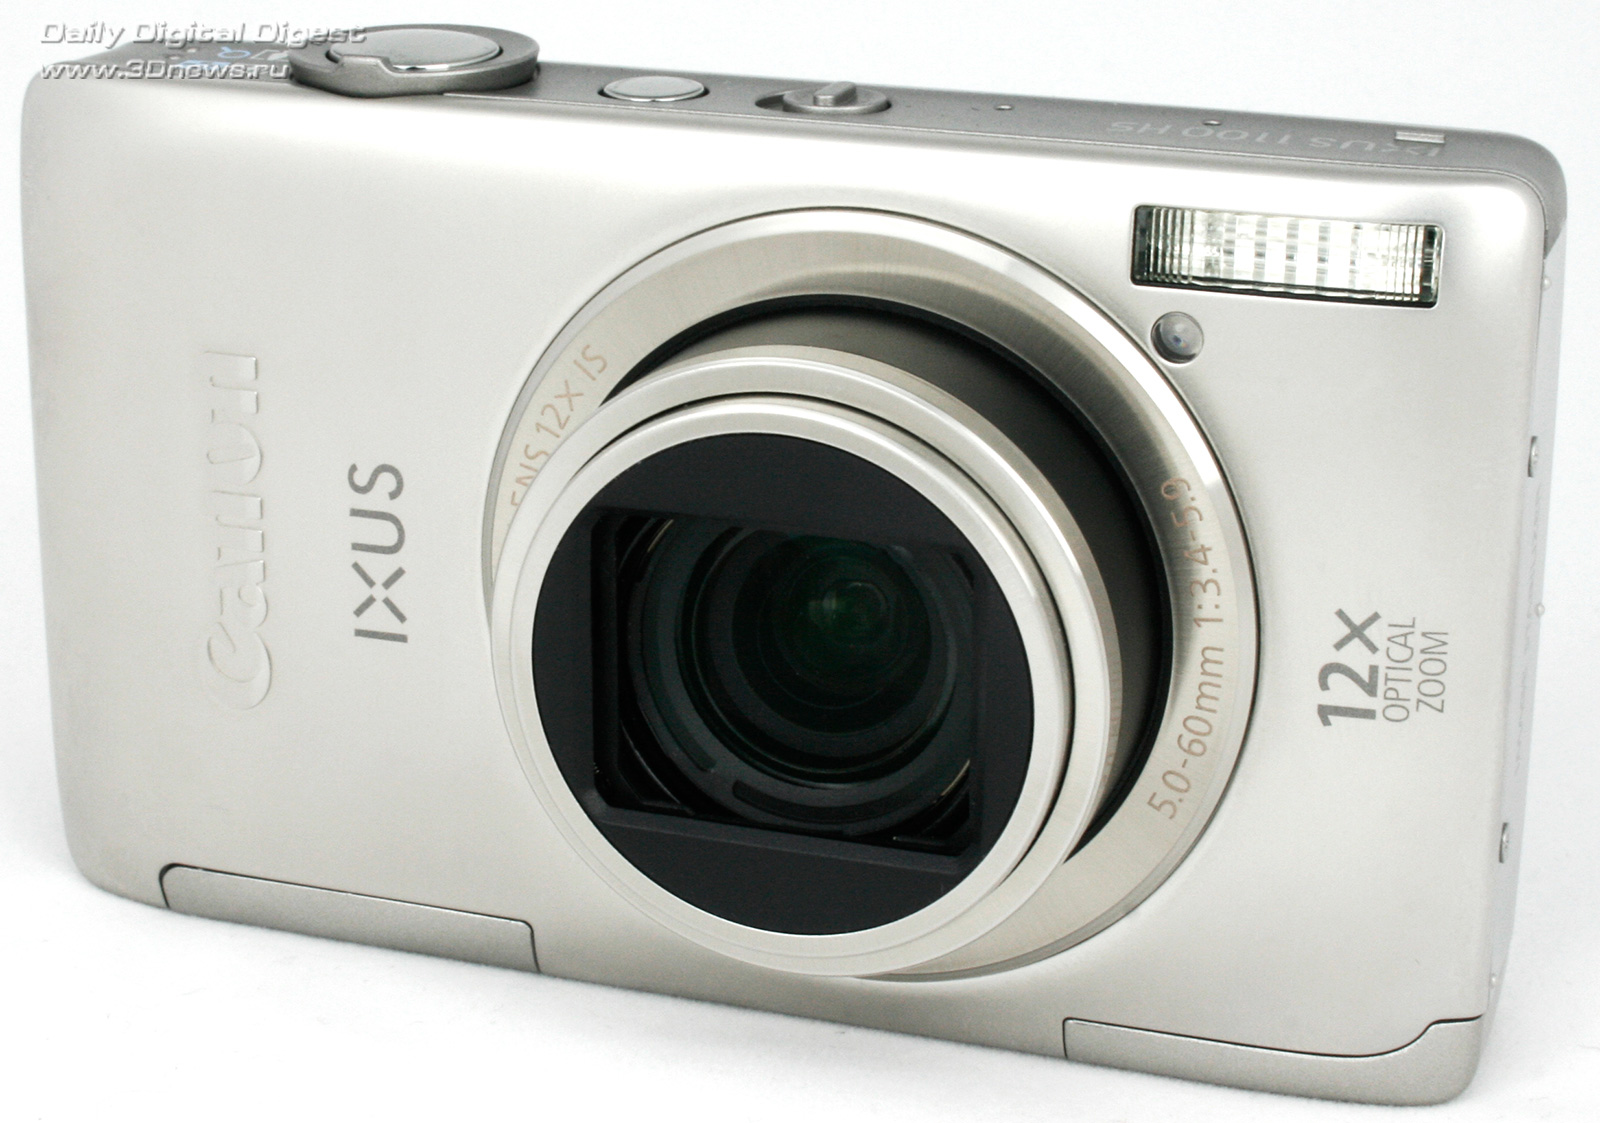 Canon IXUS 1100 HS Digital Camera Review | ePHOTOzine